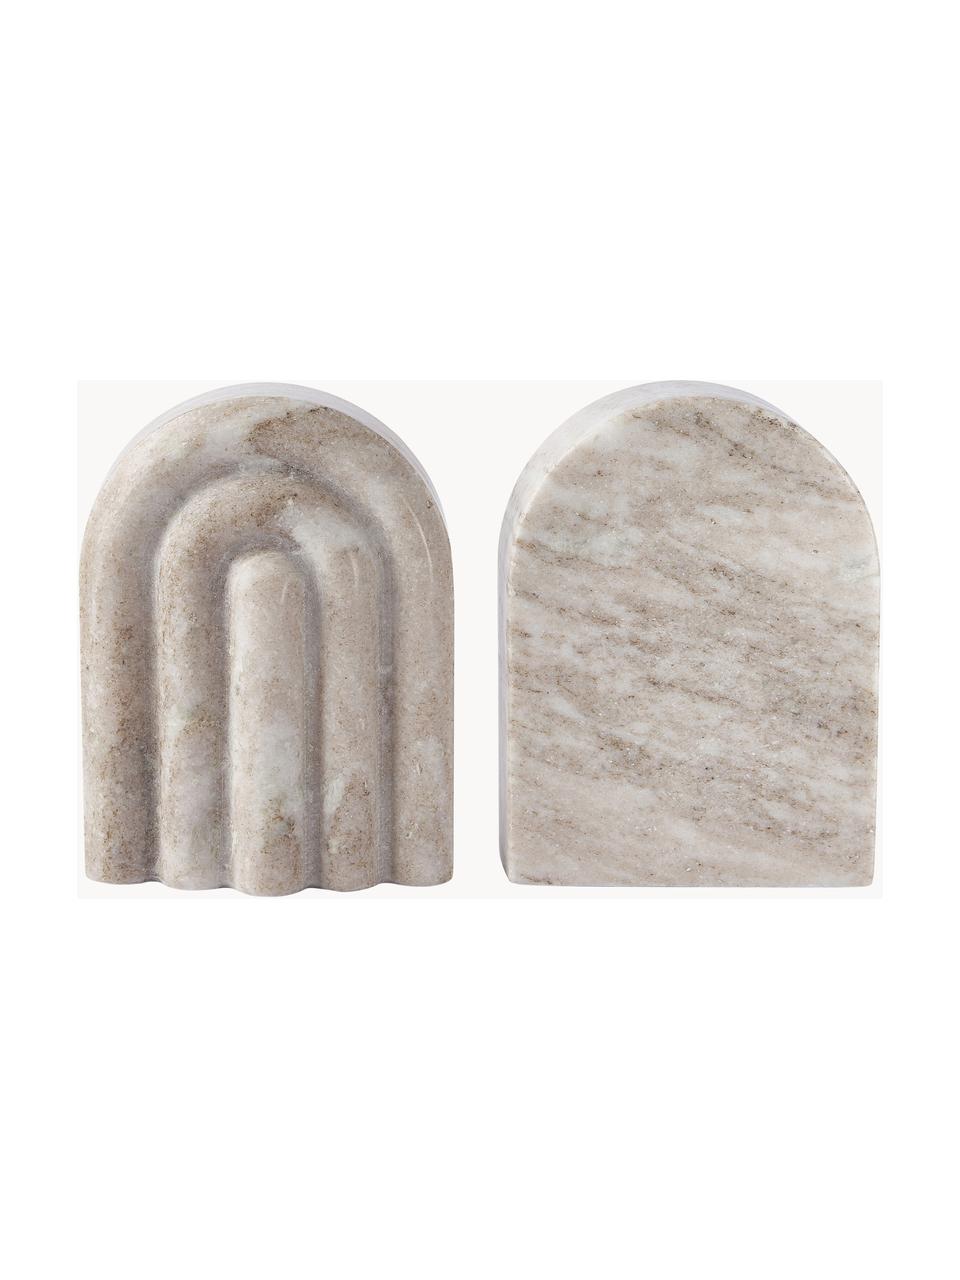 Marmor-Buchstützen Malie, 2 Stück, Marmor, Beige, marmoriert, B 12 cm x H 16 cm